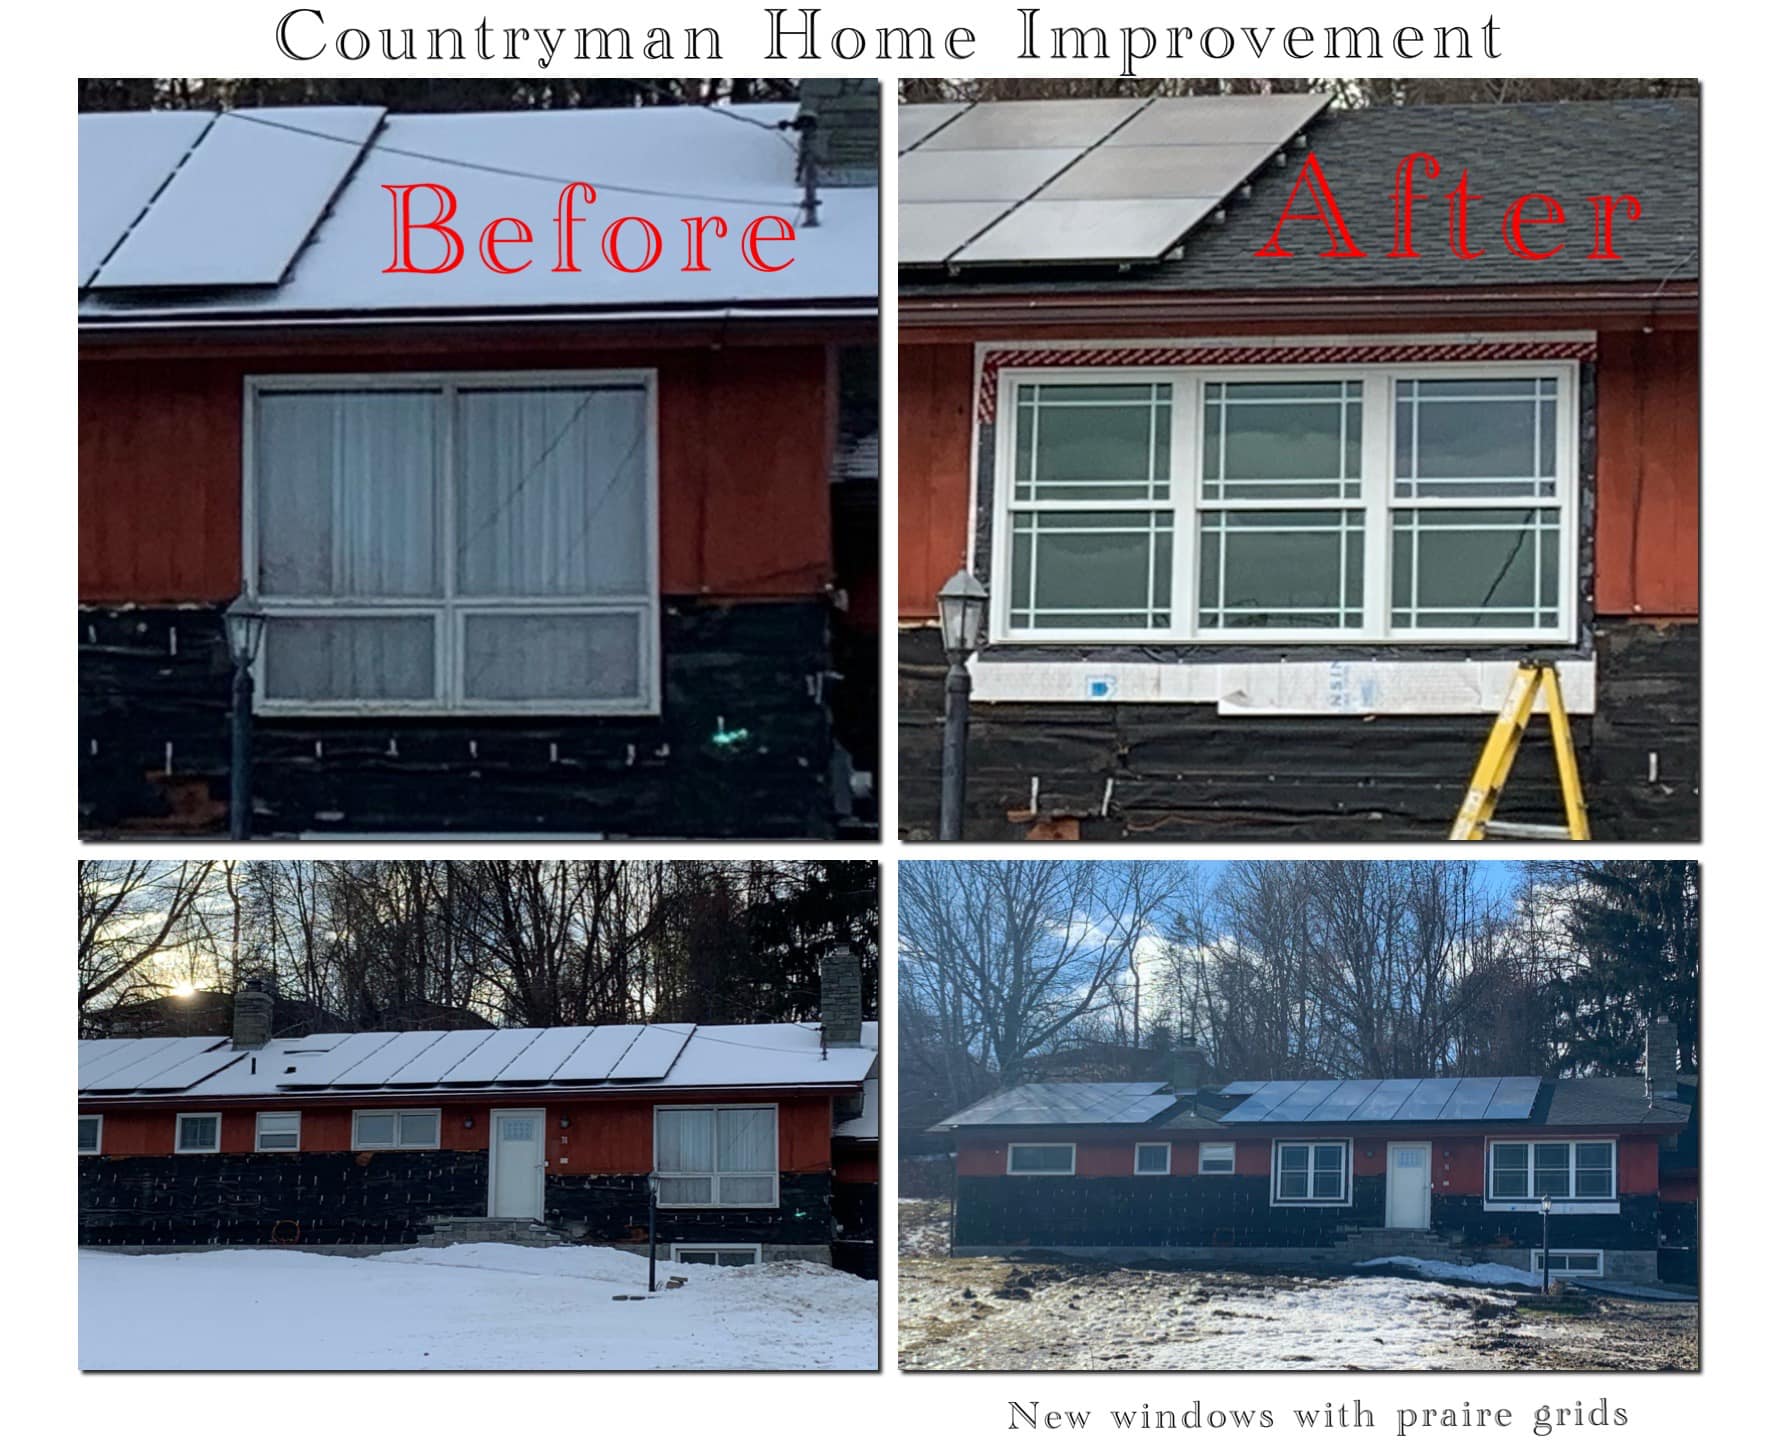 Countryman Home Improvement 71 Countryman Rd, Voorheesville New York 12186